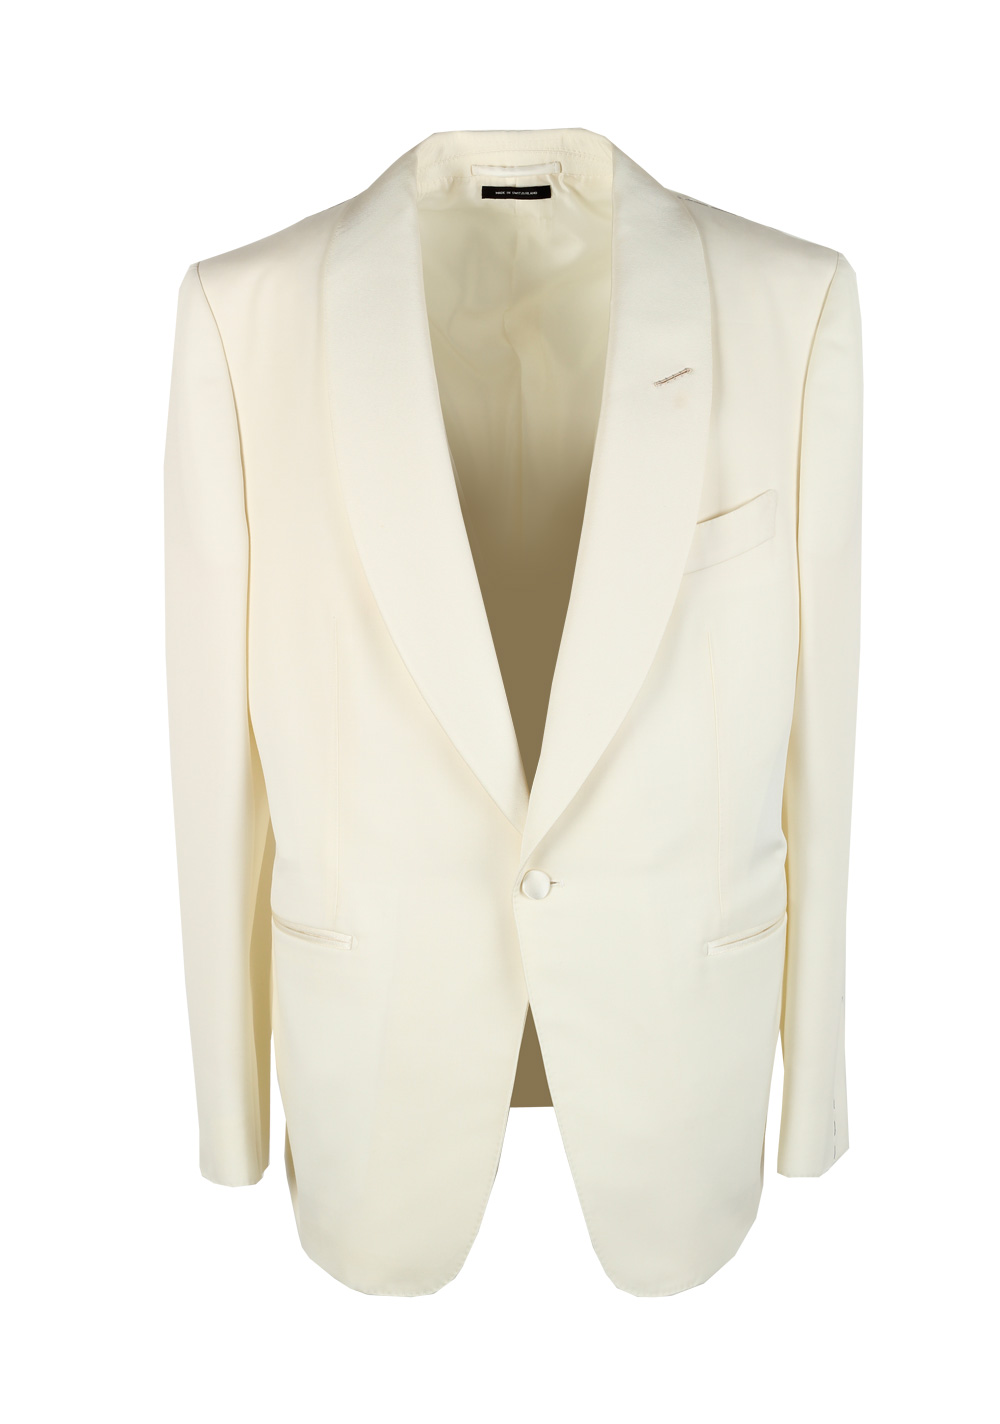 TOM FORD Windsor Shawl Collar Ivory Sport Coat Tuxedo Dinner Jacket Size 54 / 44R U.S. Fit A | Costume Limité